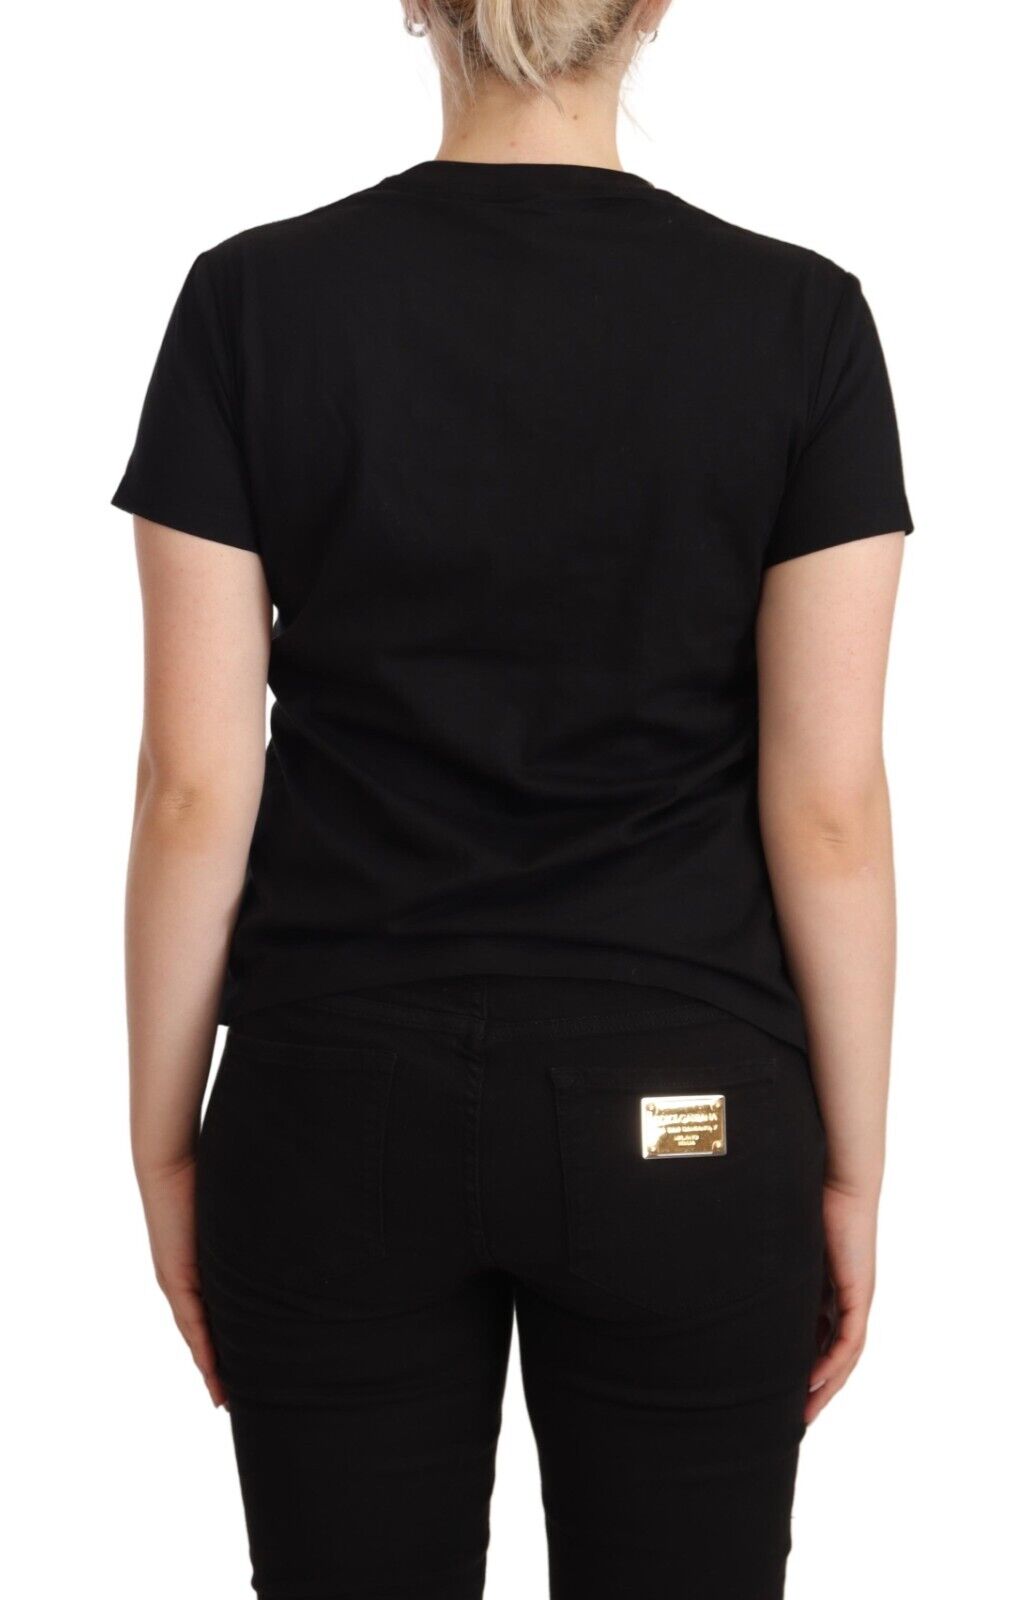 PINKO Black Cotton Short Sleeves Embellished T-shirt Jersey Top - Fizigo